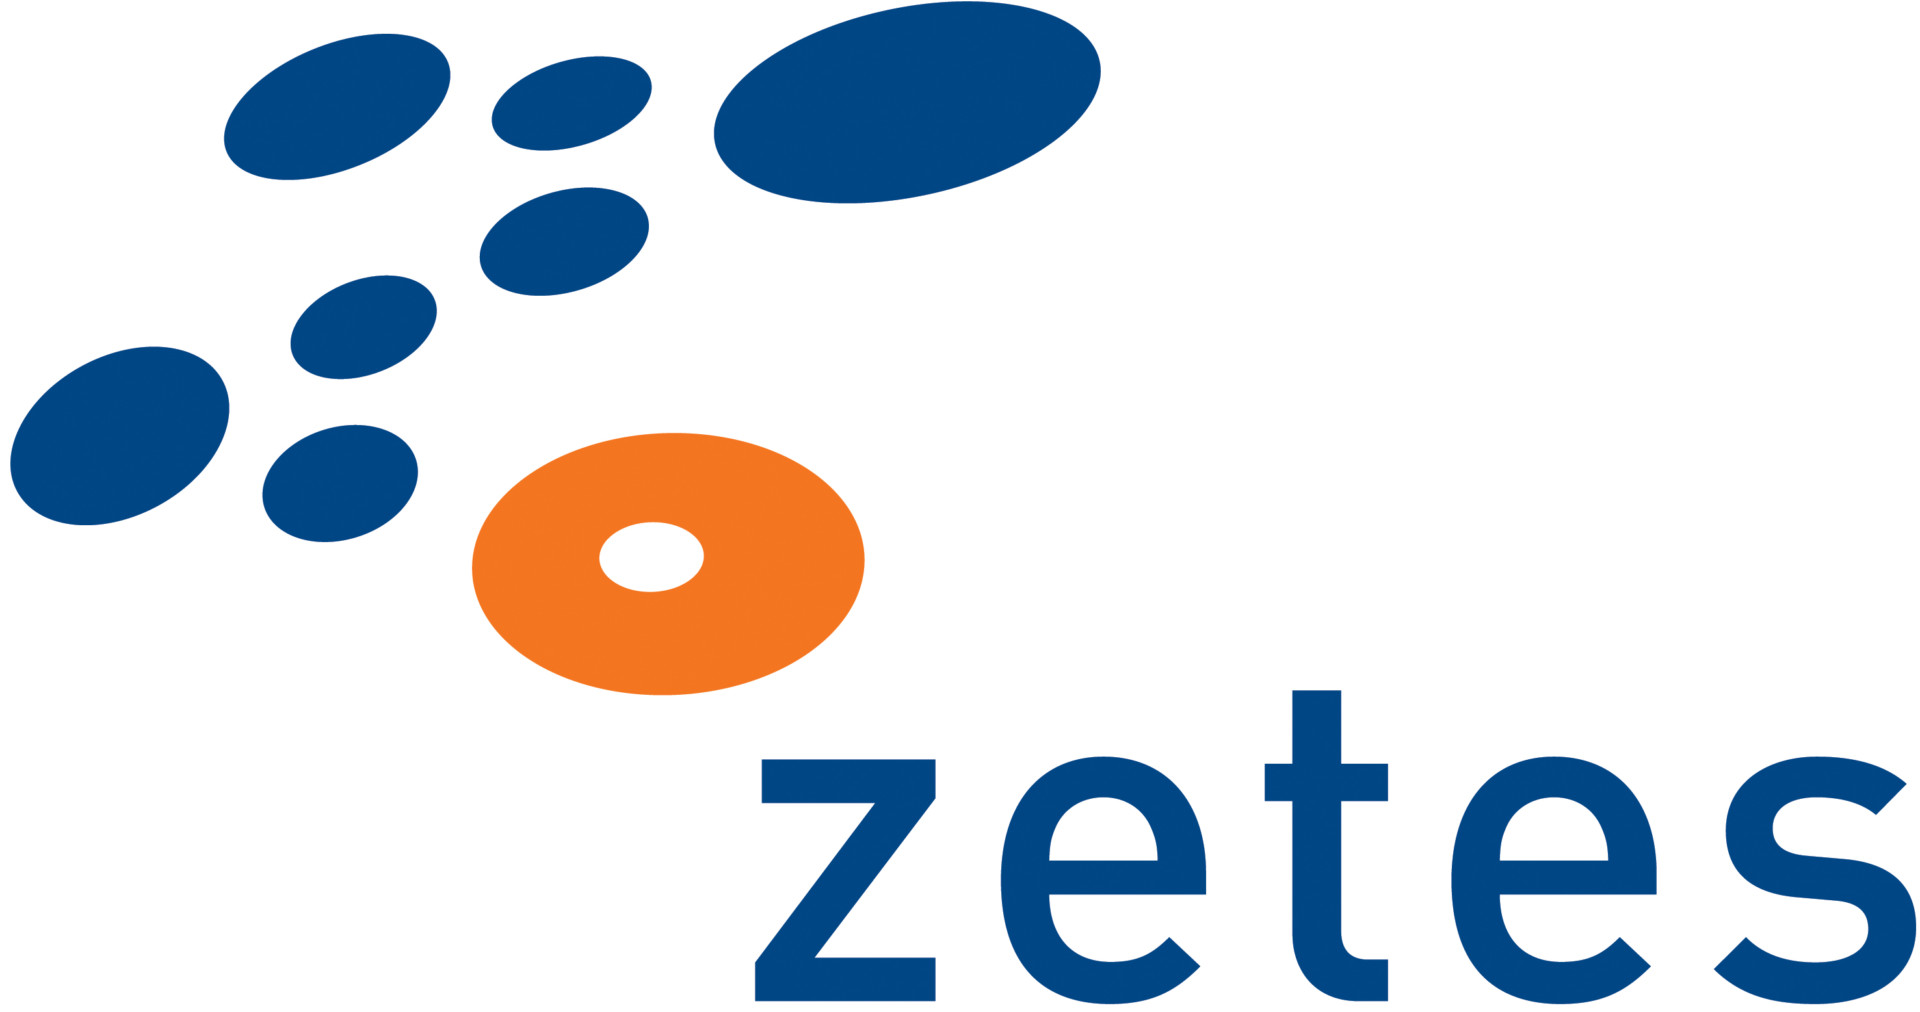 Zetes-logo-high-res